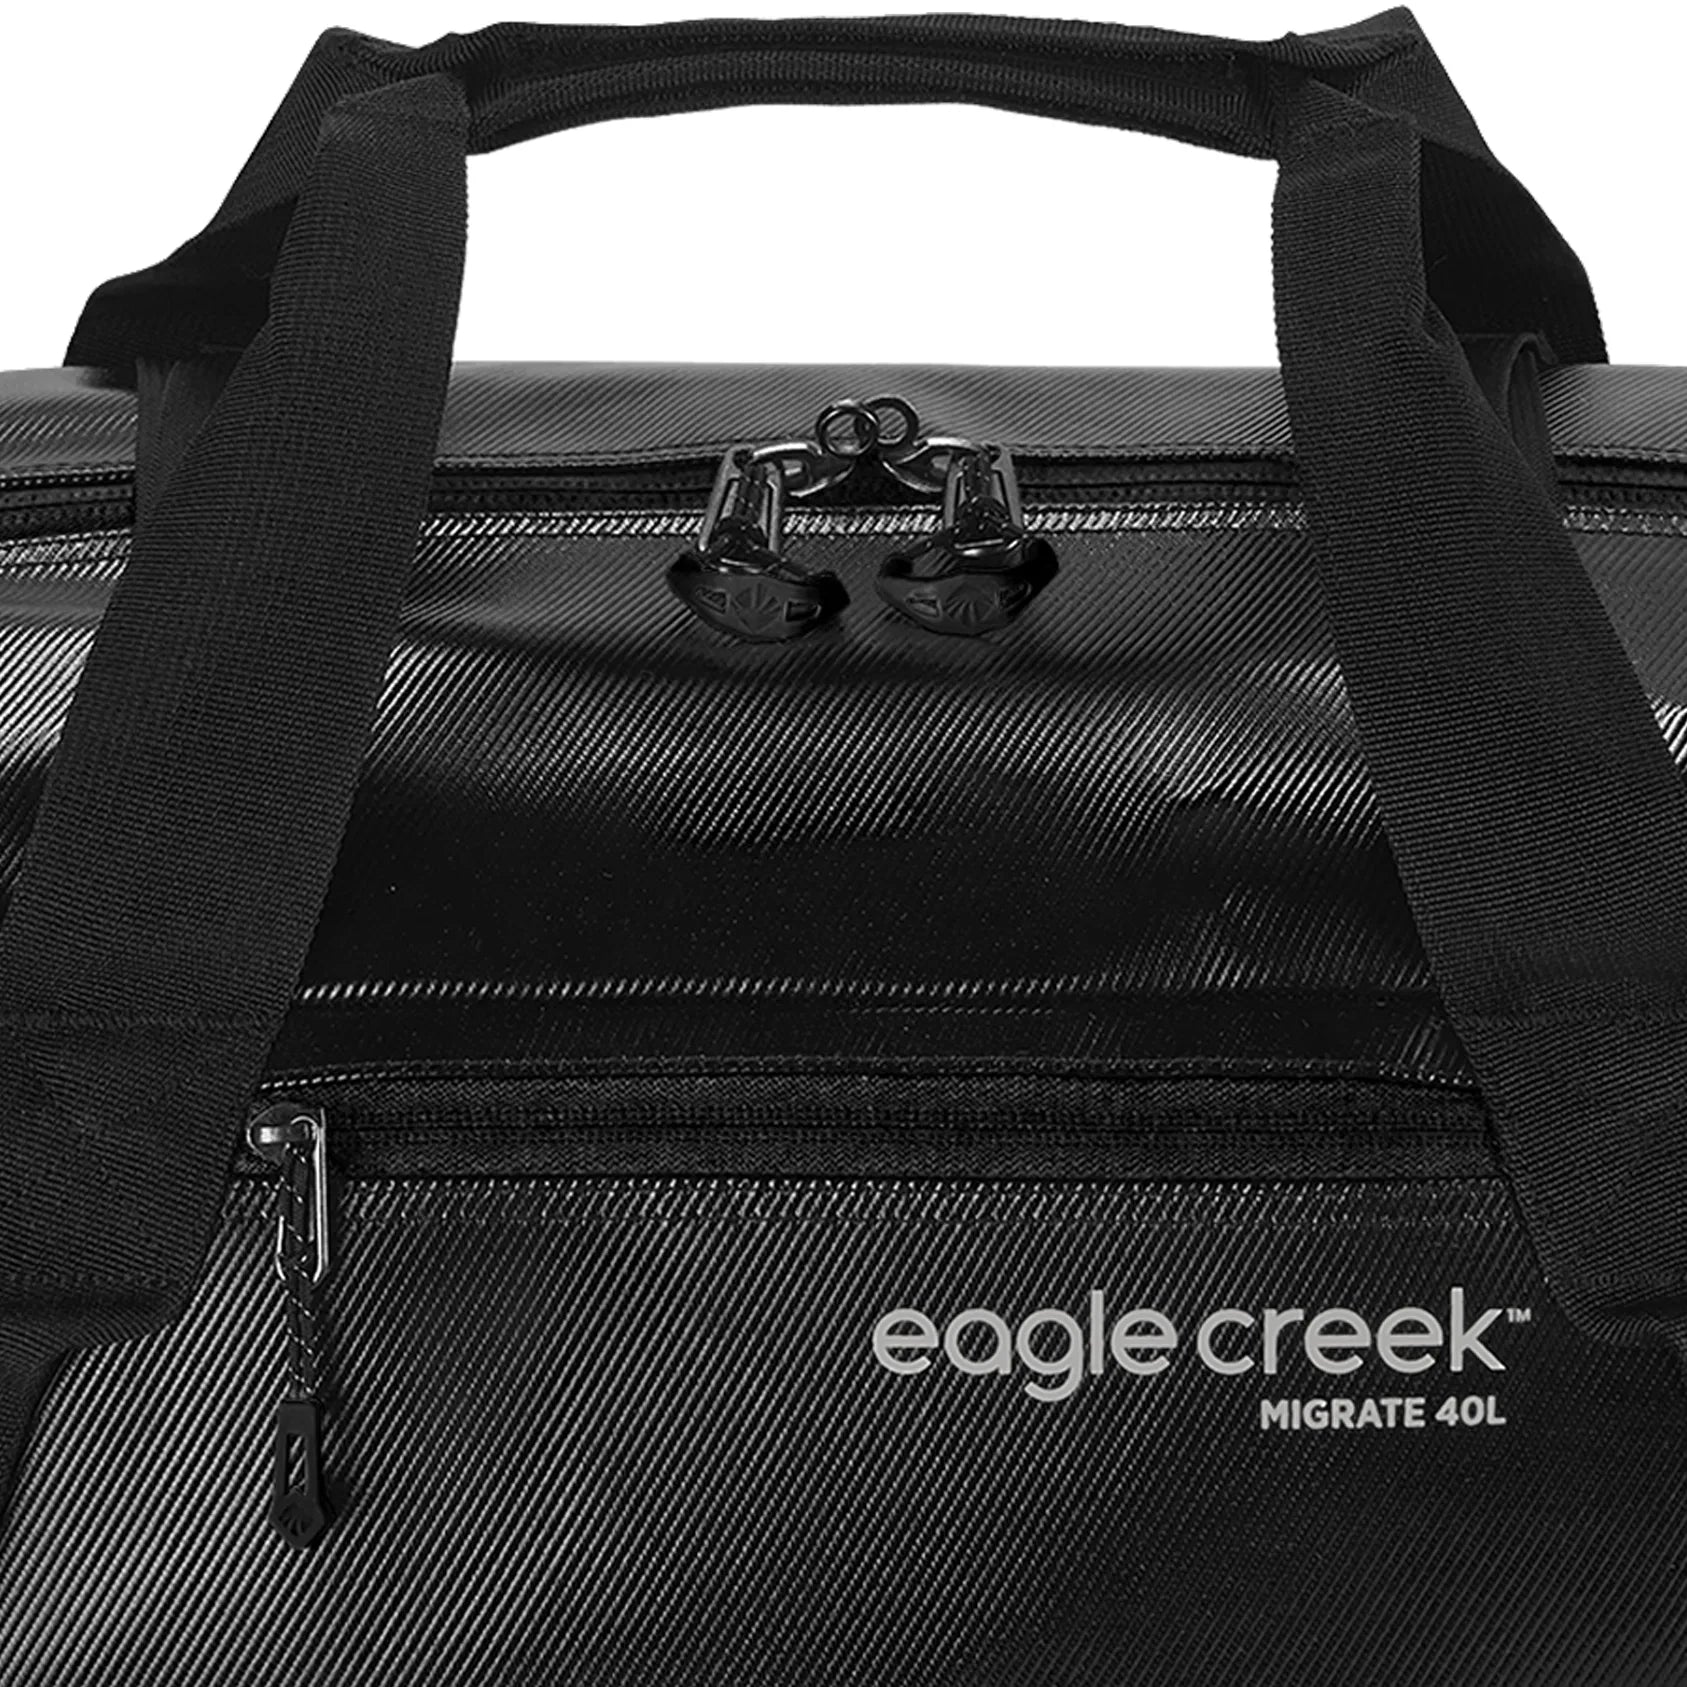 Eagle Creek Migrate sac de voyage 47 cm - noir